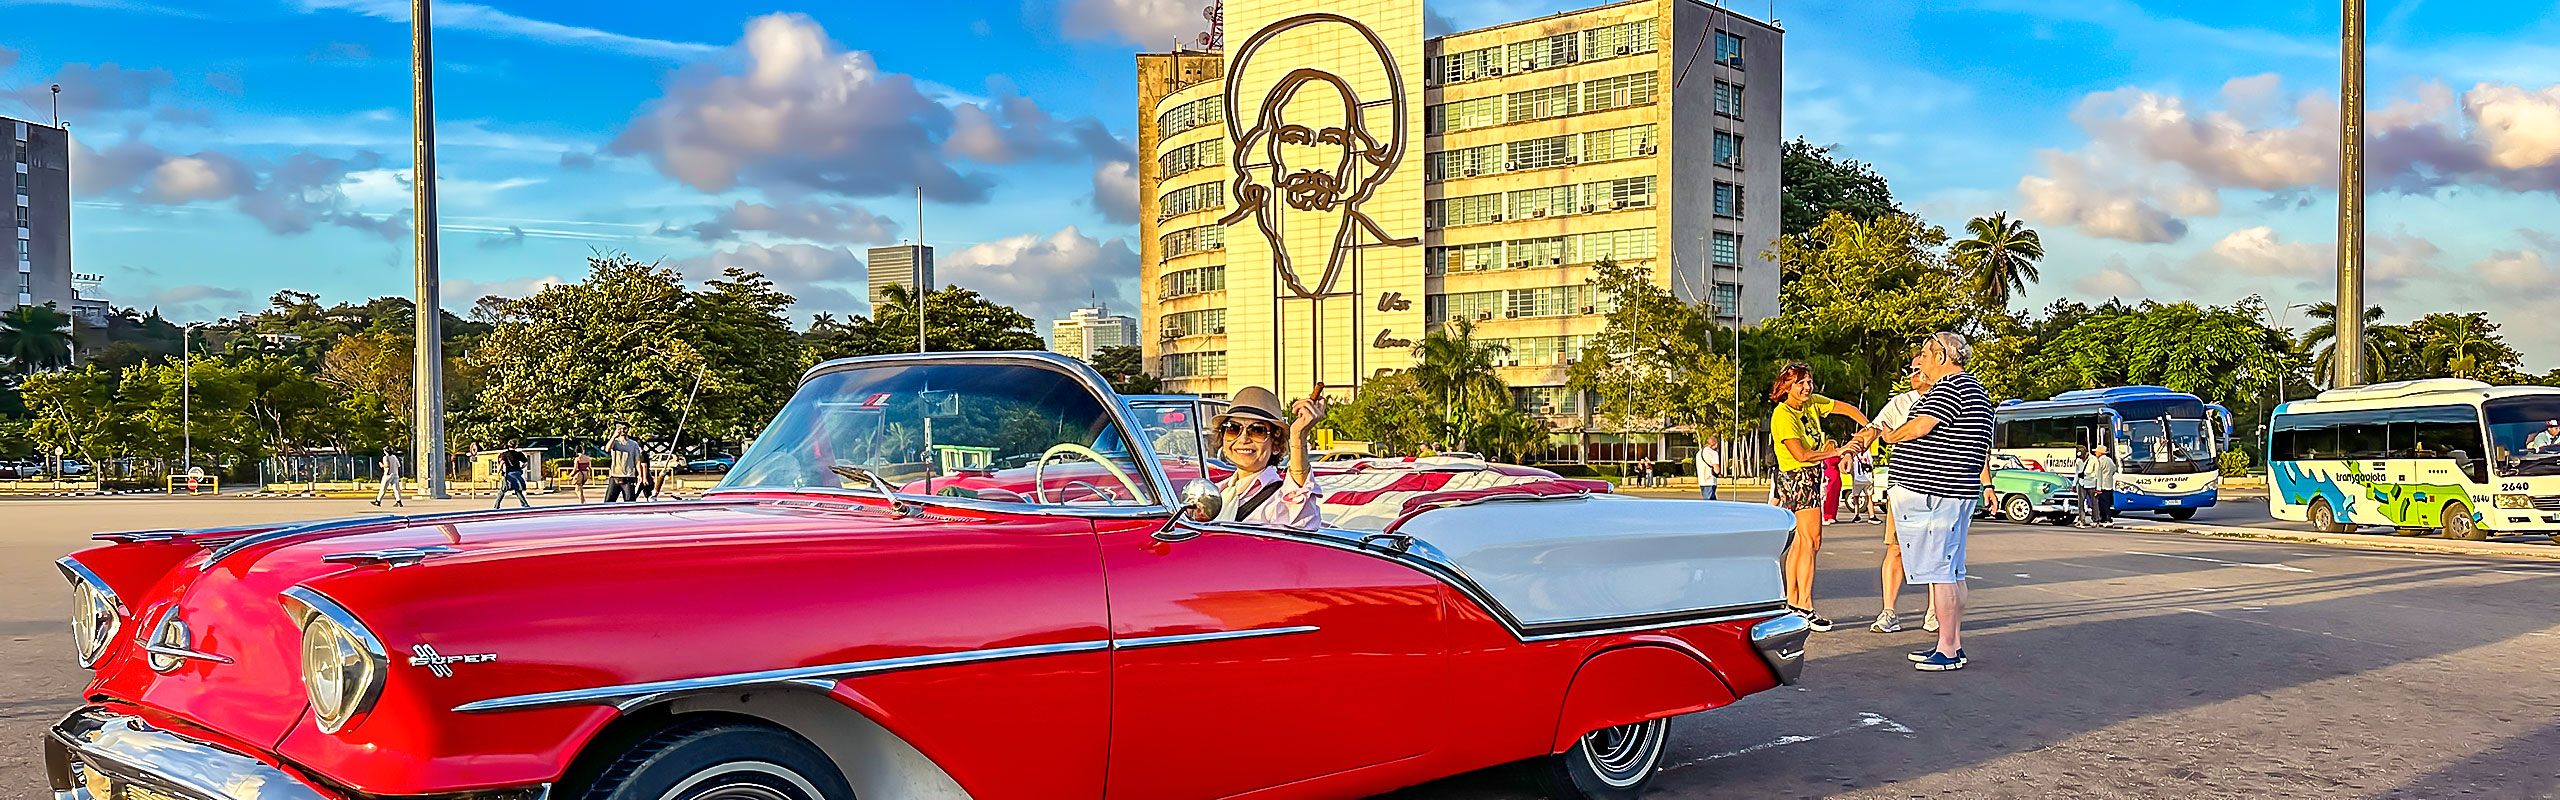 Cuba Old Havana City